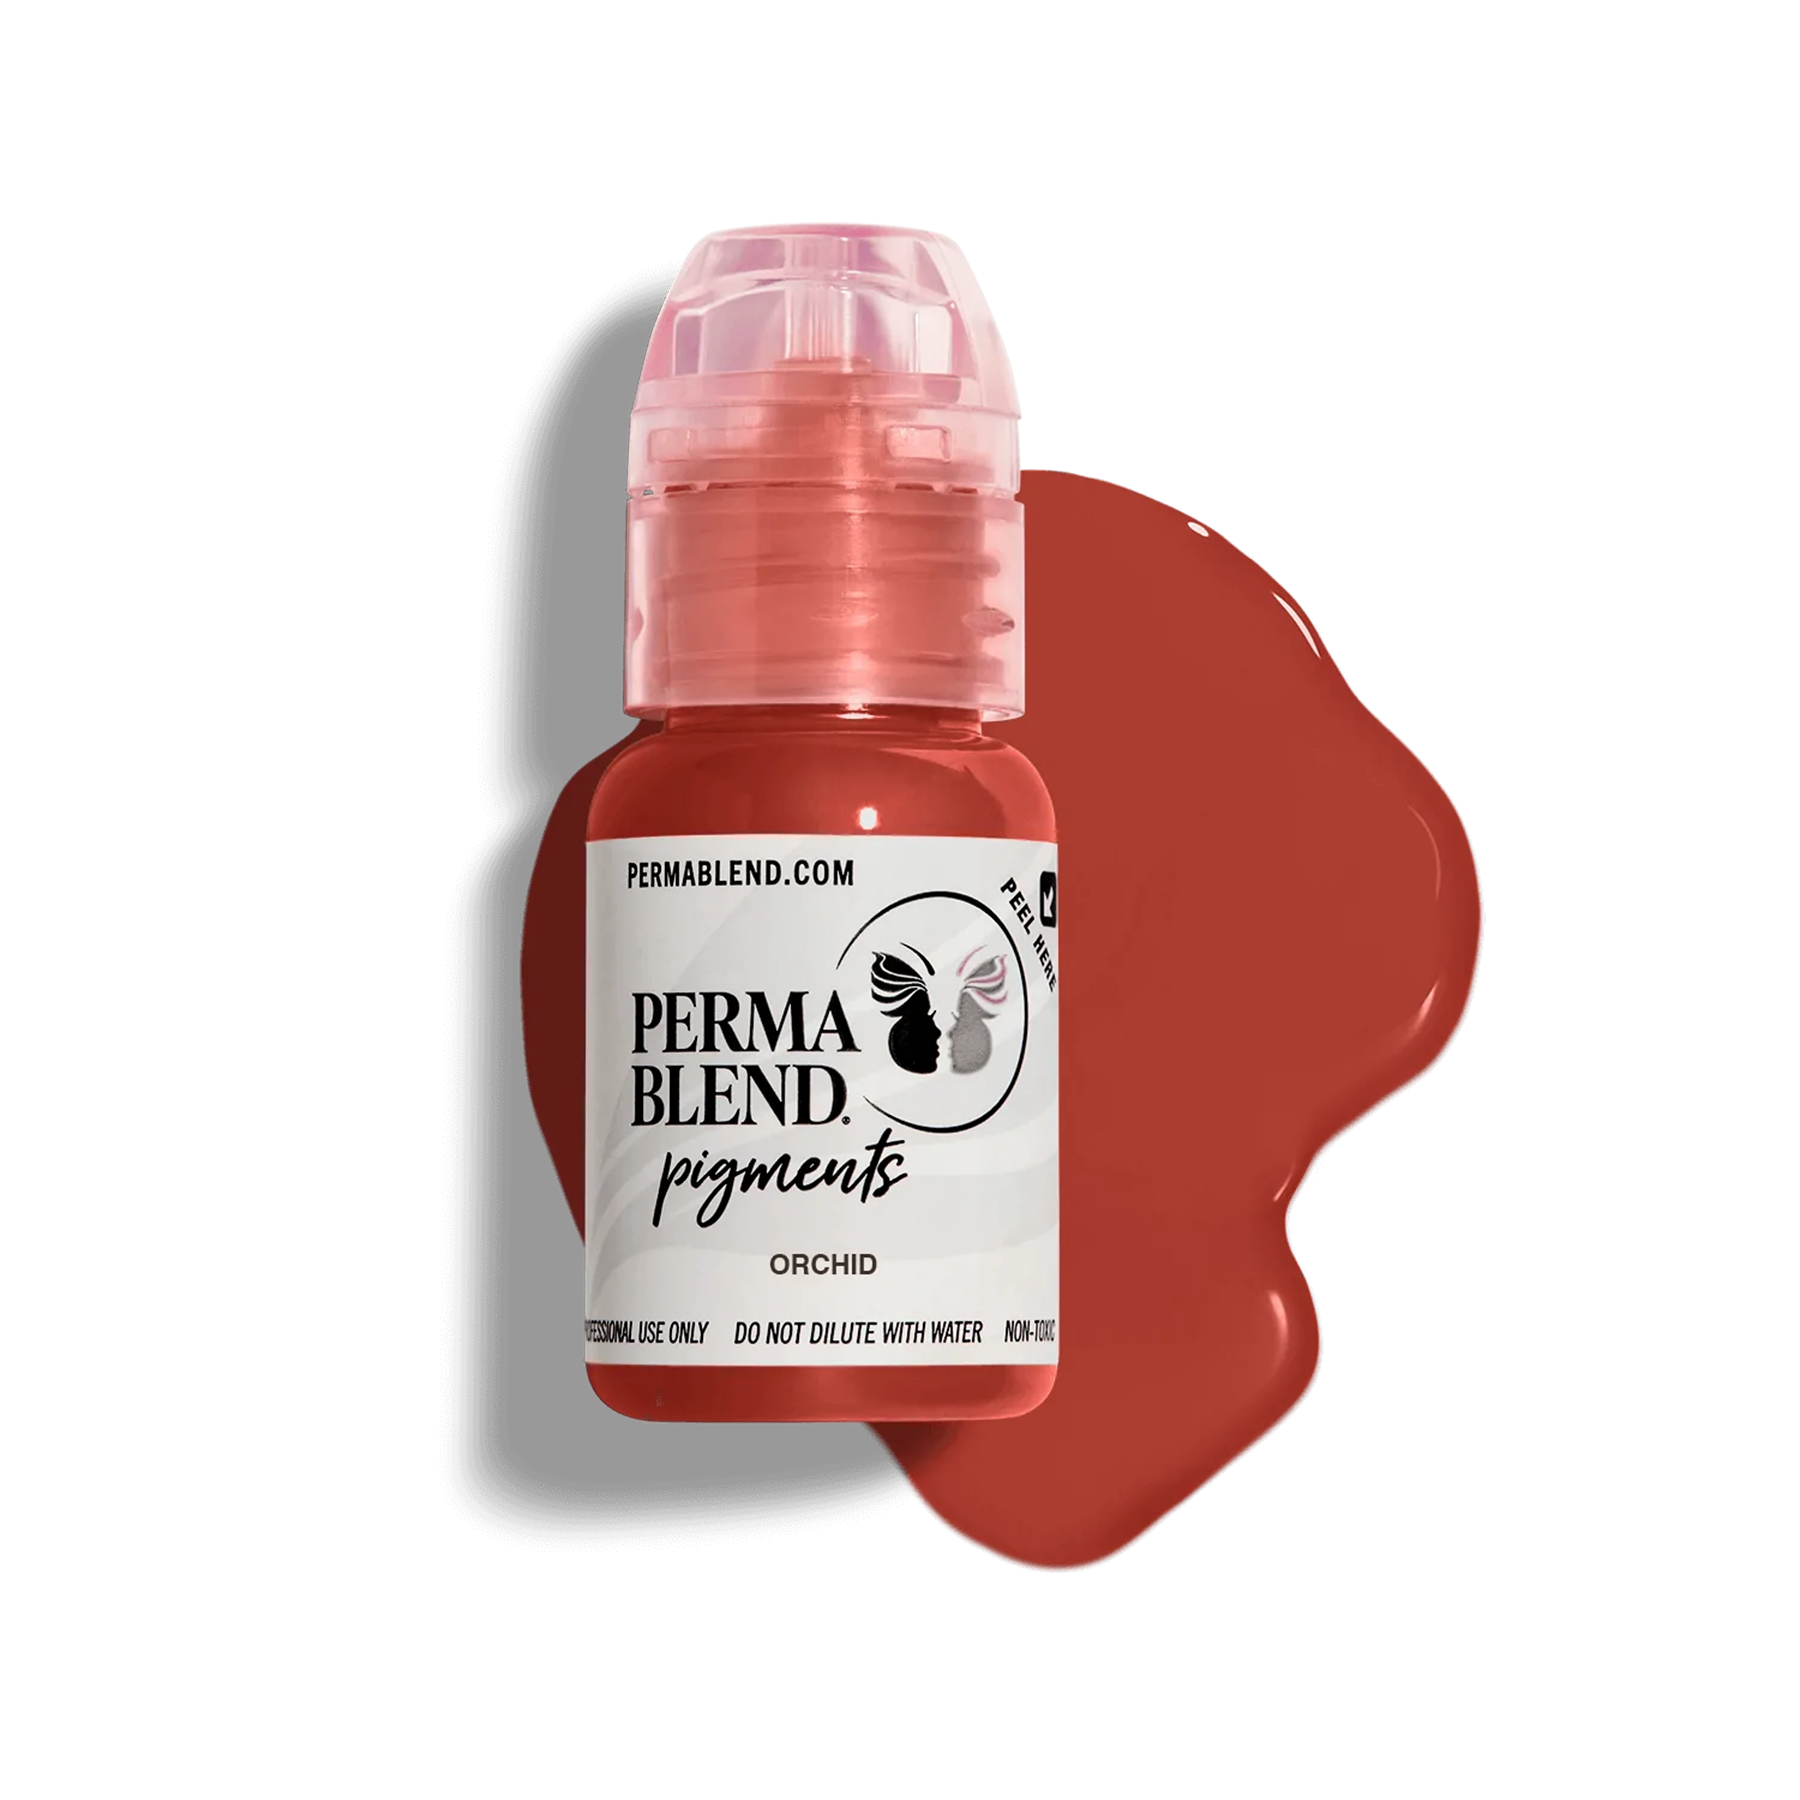 Signature Lip Set by Perma Blend, Permanent Makeup Pigments, Pigments for Lip Blush, Orchid